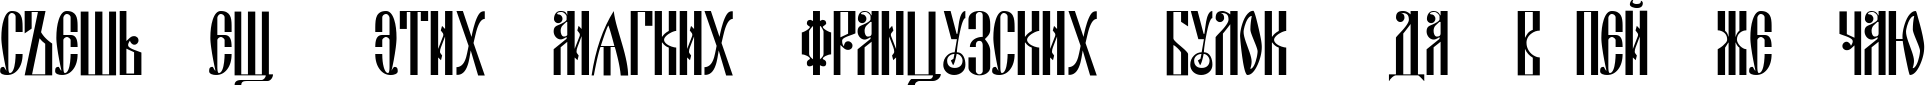 Пример написания шрифтом DSCyrillic текста на русском